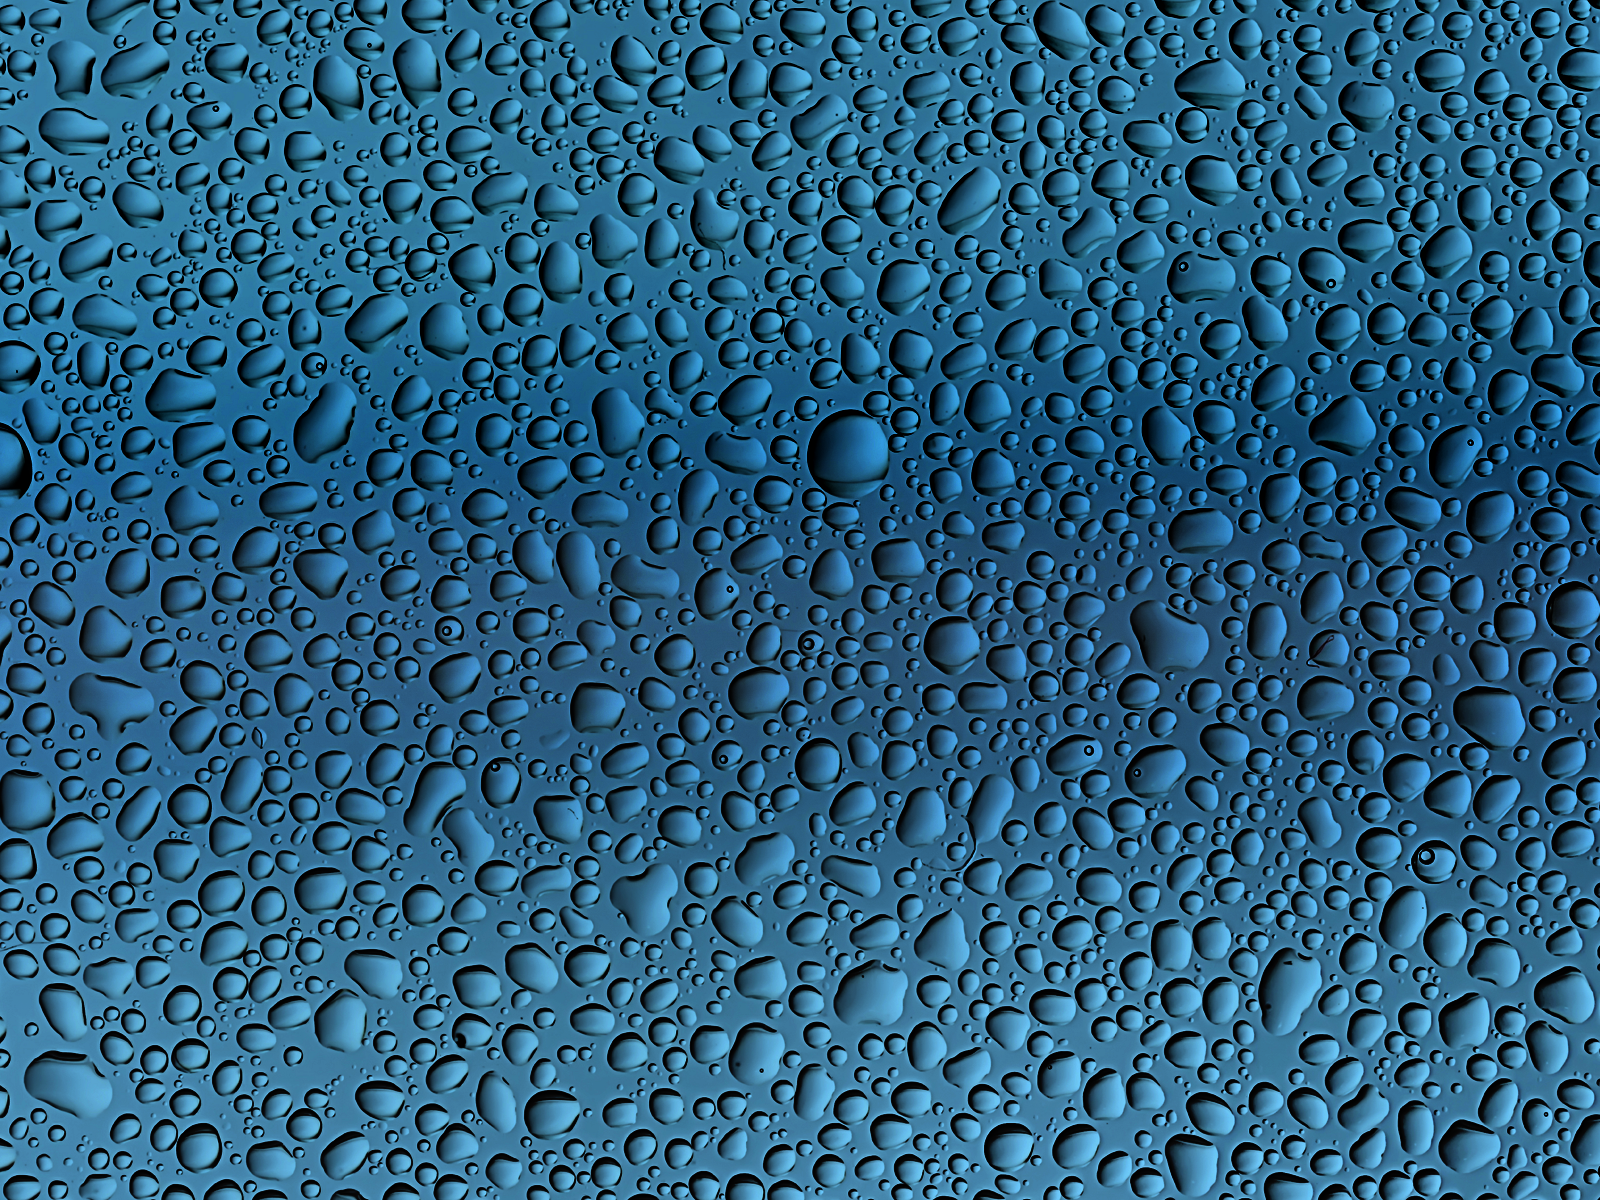 Smokey Blue Water Drops wallpaper Green Water Drops wallpaper The